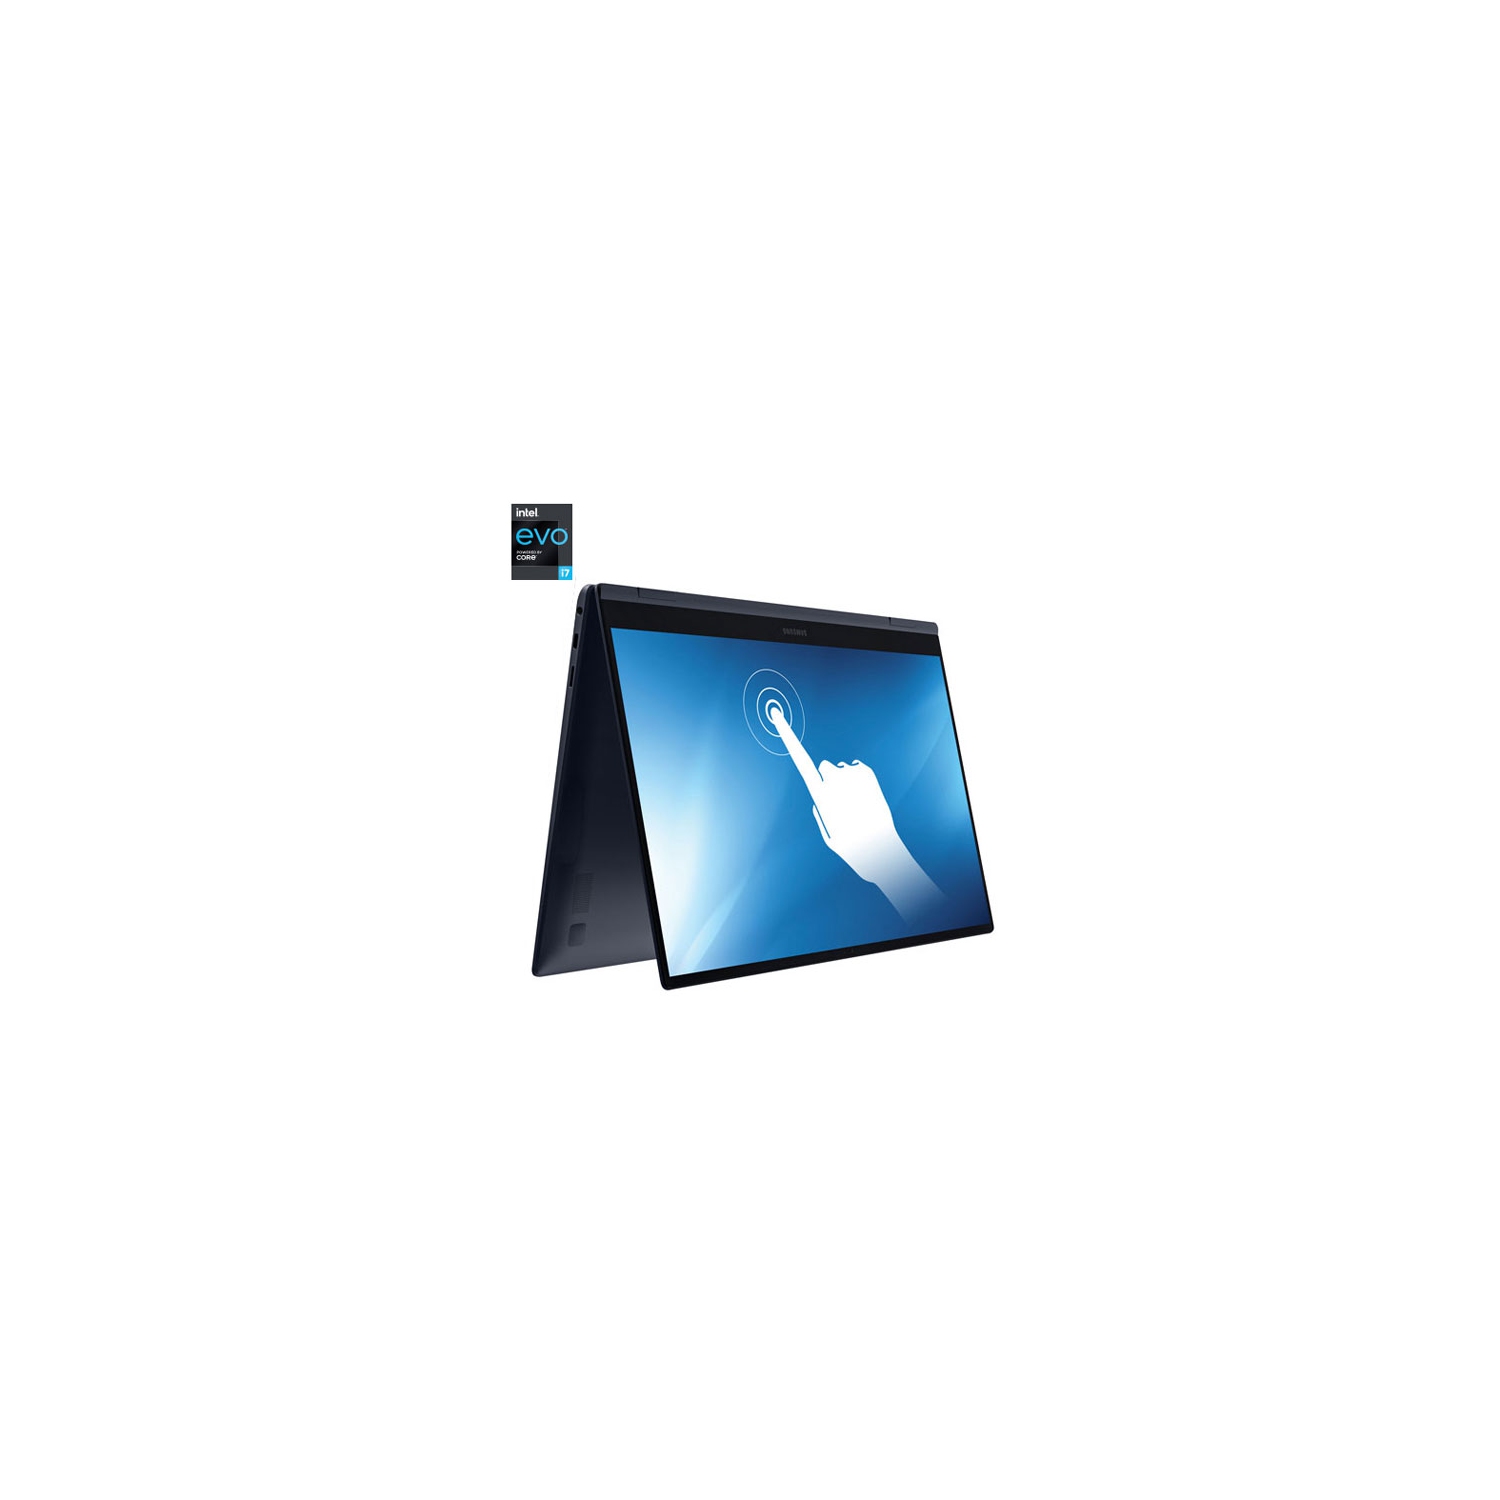 Refurbished (Good) - Samsung Galaxy Book Pro 360 15.6" Touchscreen 2-in-1 Laptop (Intel Ci7-1165G7/512GB SSD/16GB RAM/Win 11)